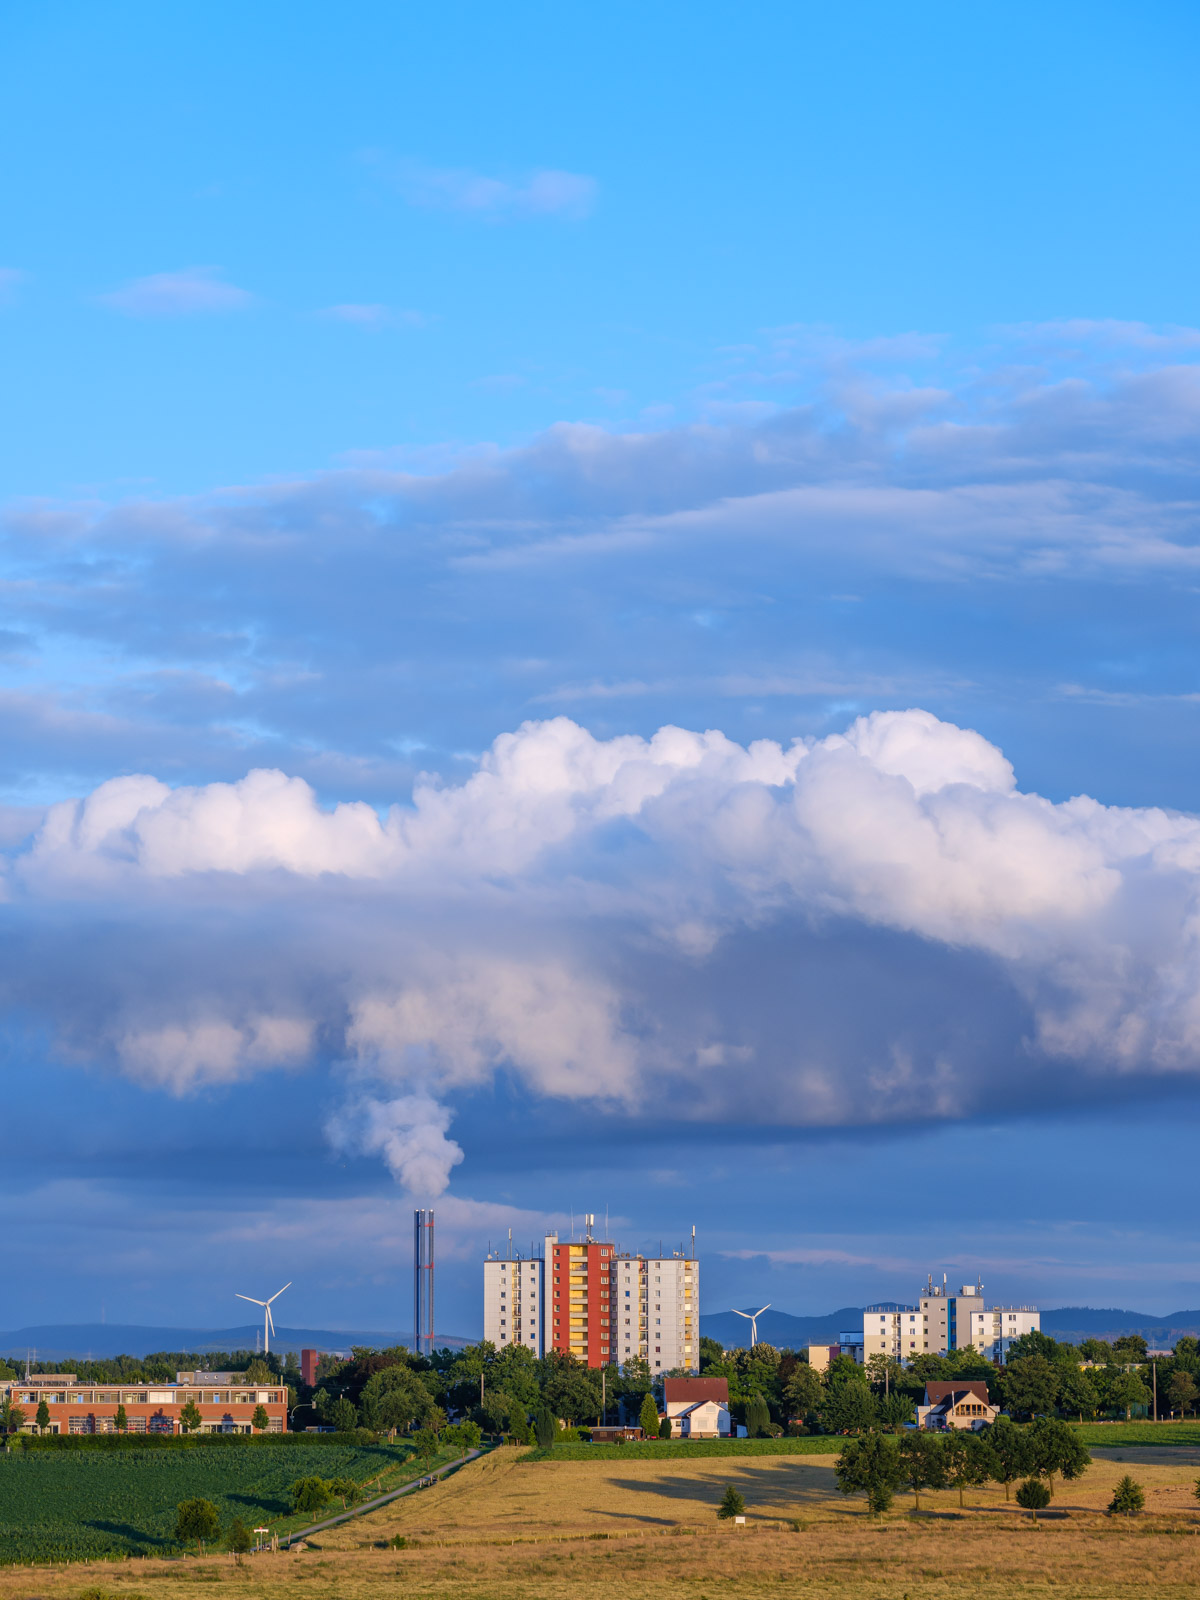 Clouds over 'Baumheide' in July 2020 (Bielefeld, Germany).